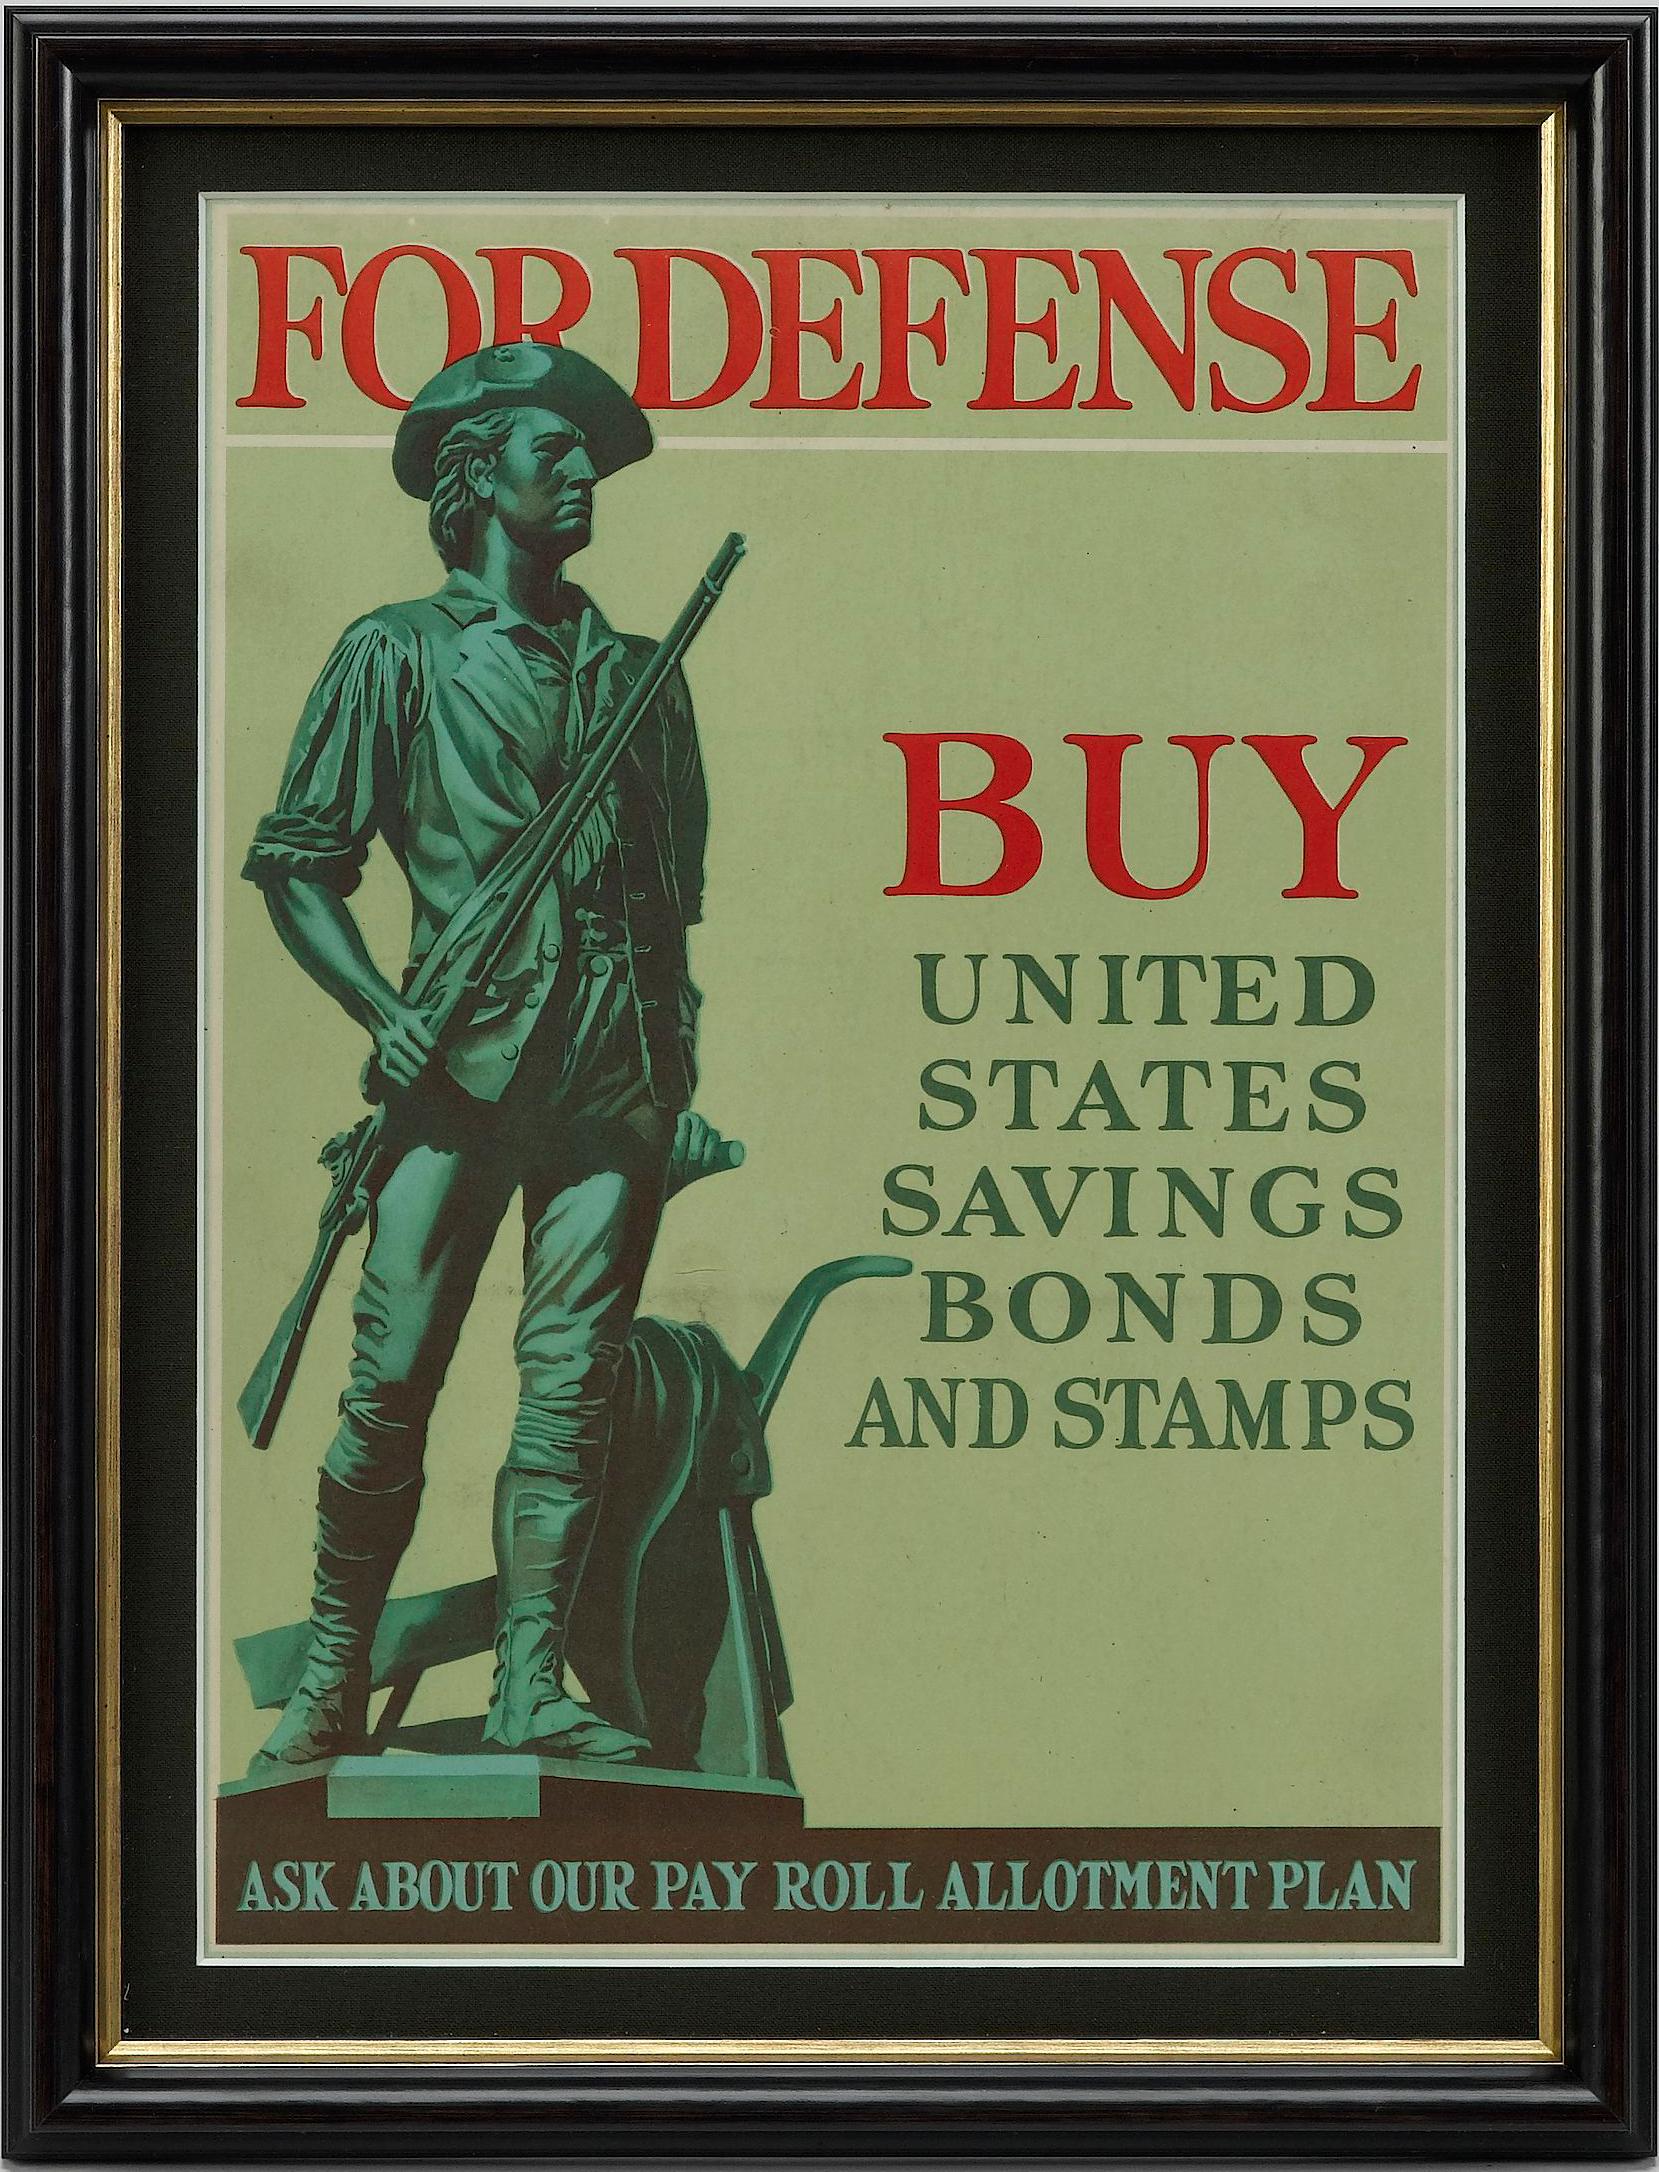 united states defense savings bonds